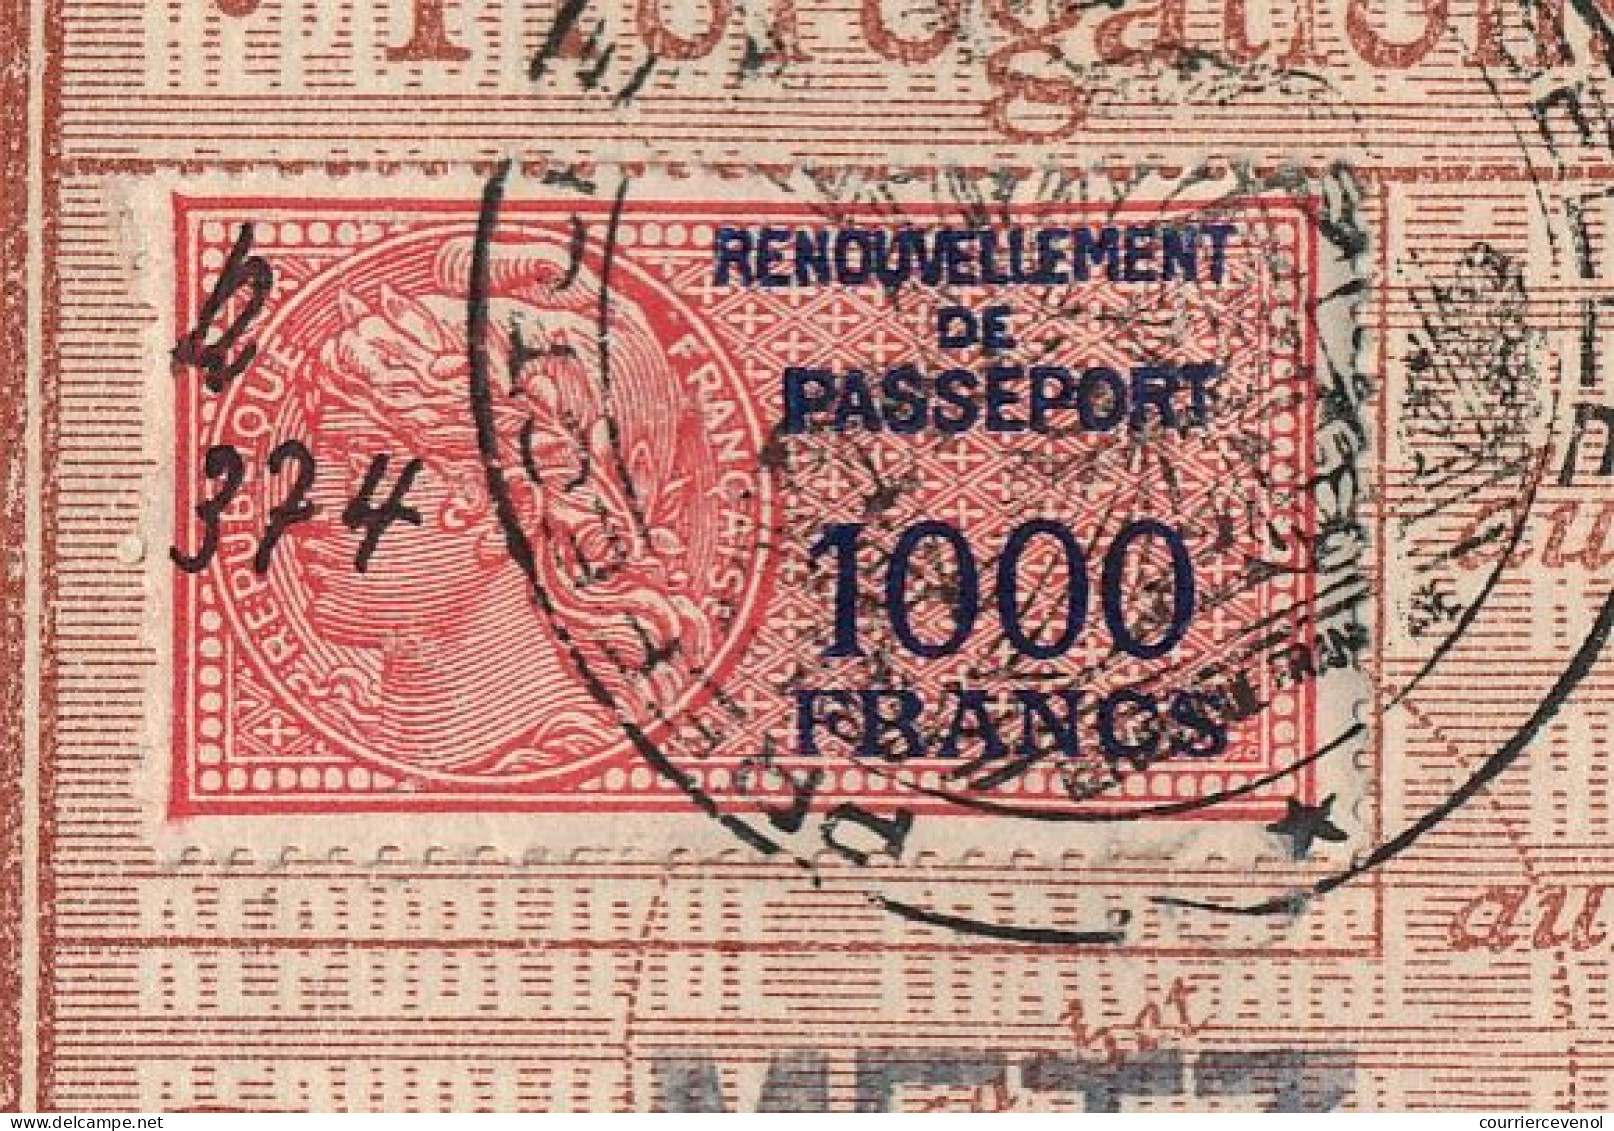 FRANCE - Passeport 500 francs 1949/1956 - Metz, renouvelé id. timbre fiscal 1000 francs + visa allemand